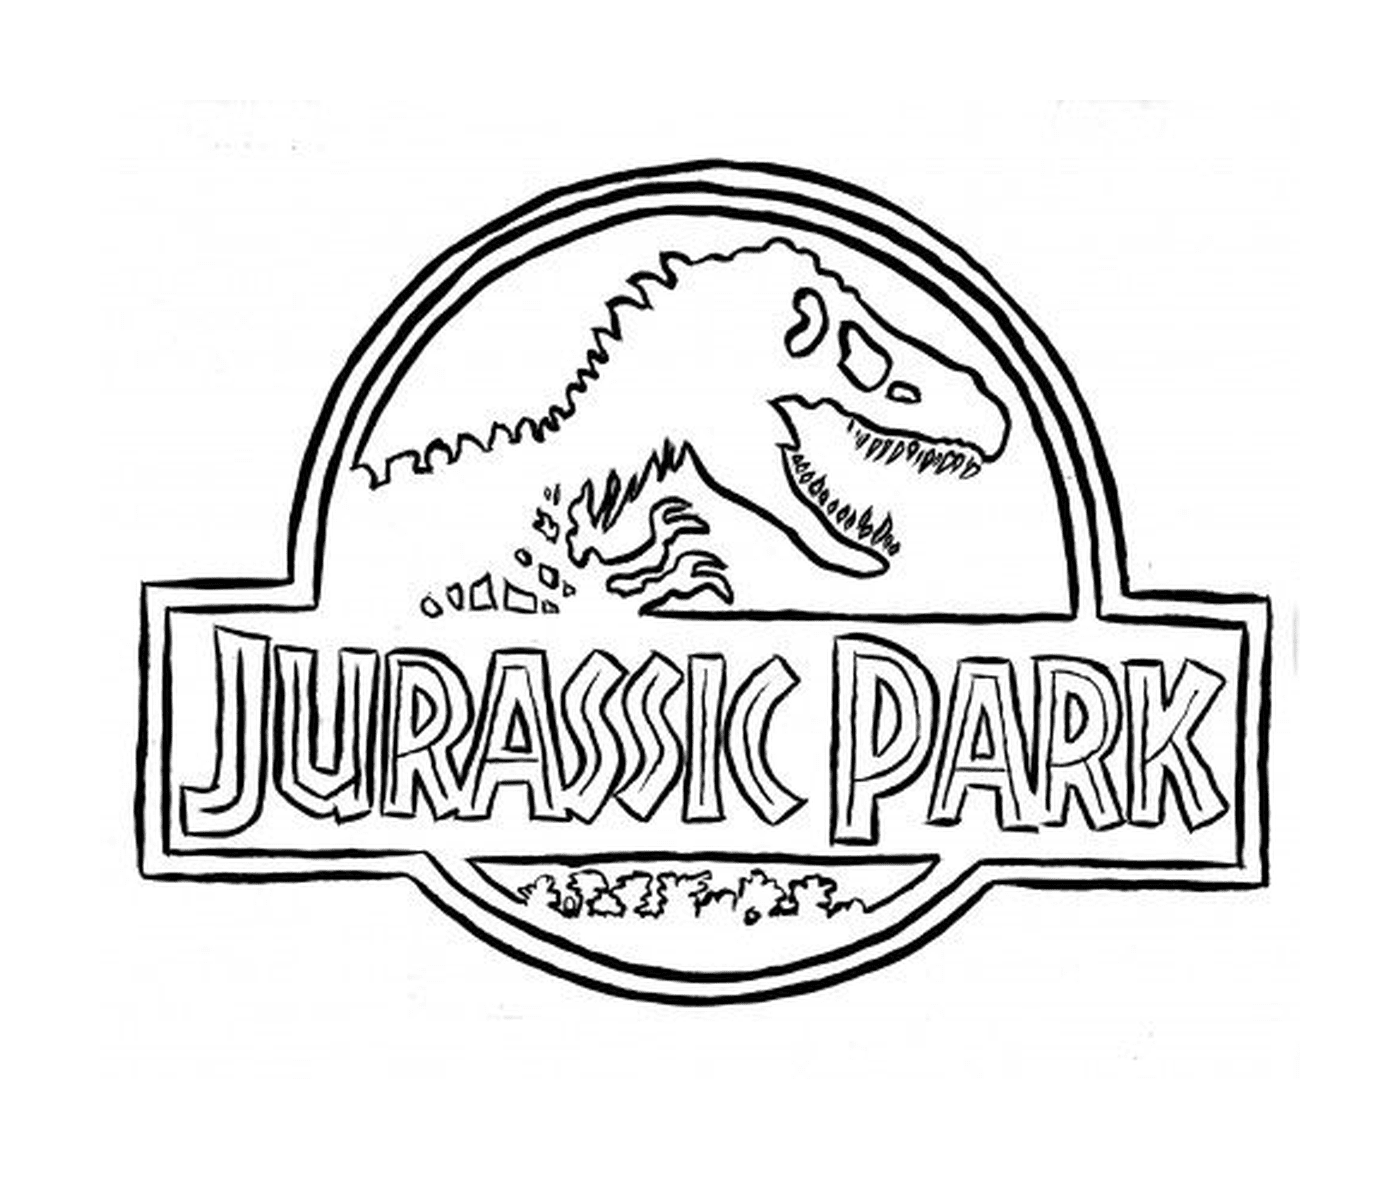  Jurassic Park logo 